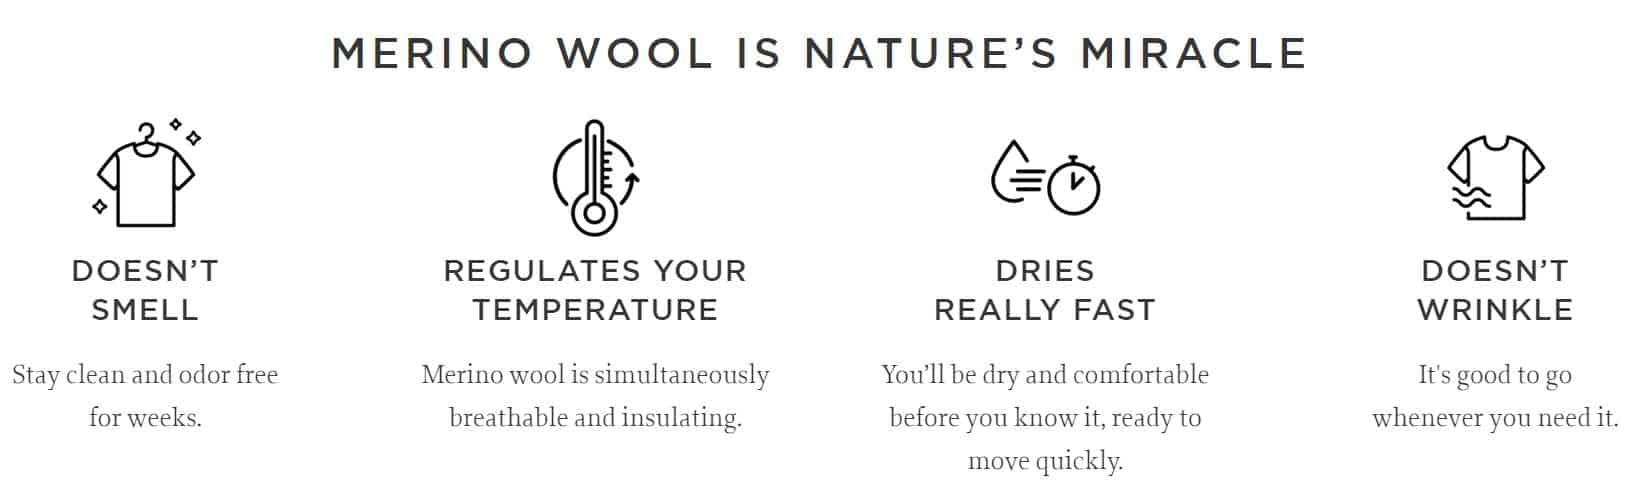 Ridge Merino Wool Men's Review - The Wool Life